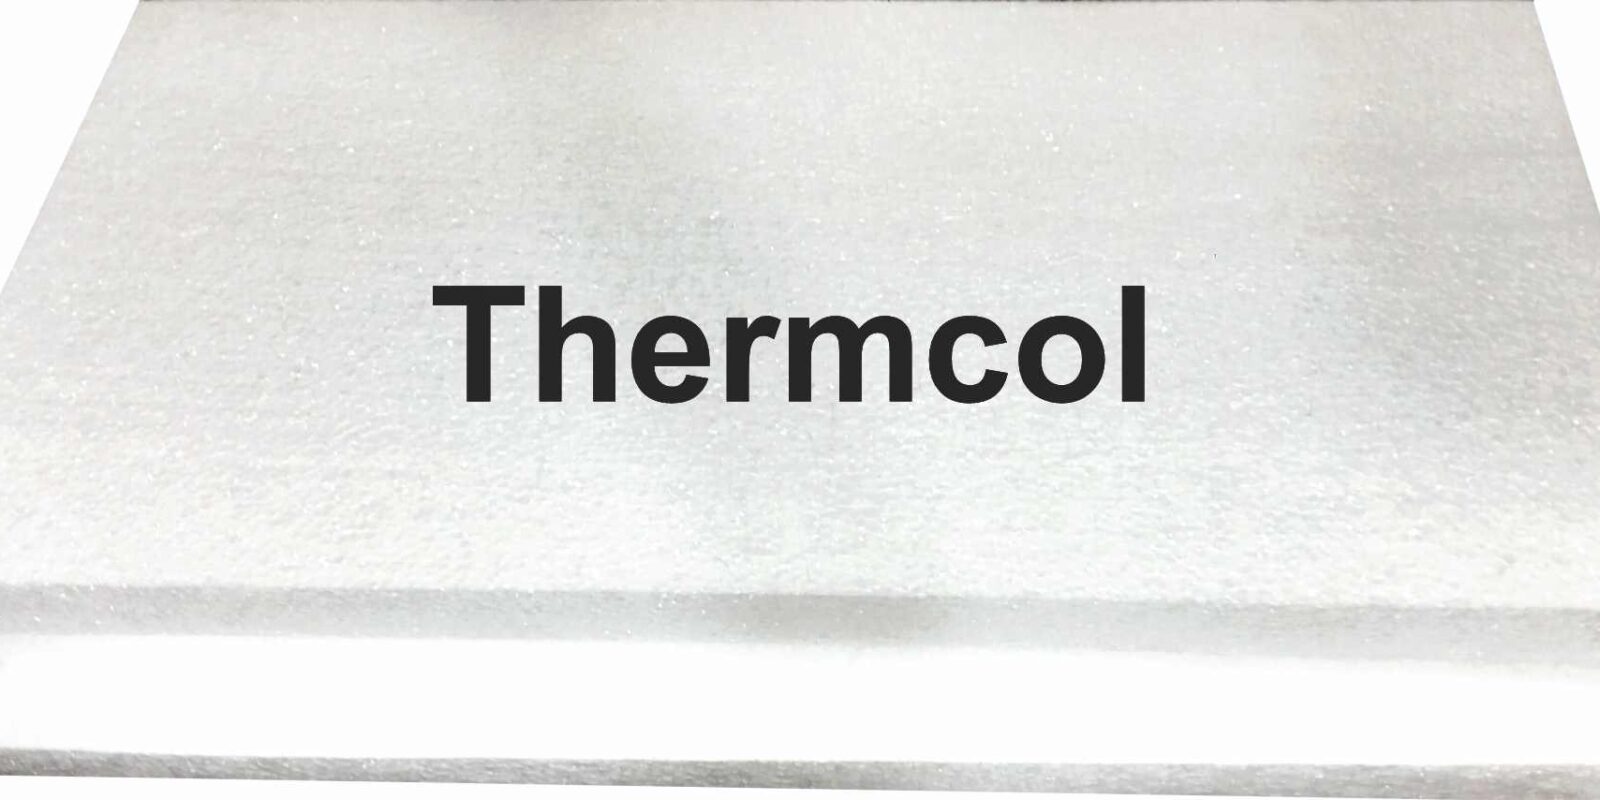 Thermocol